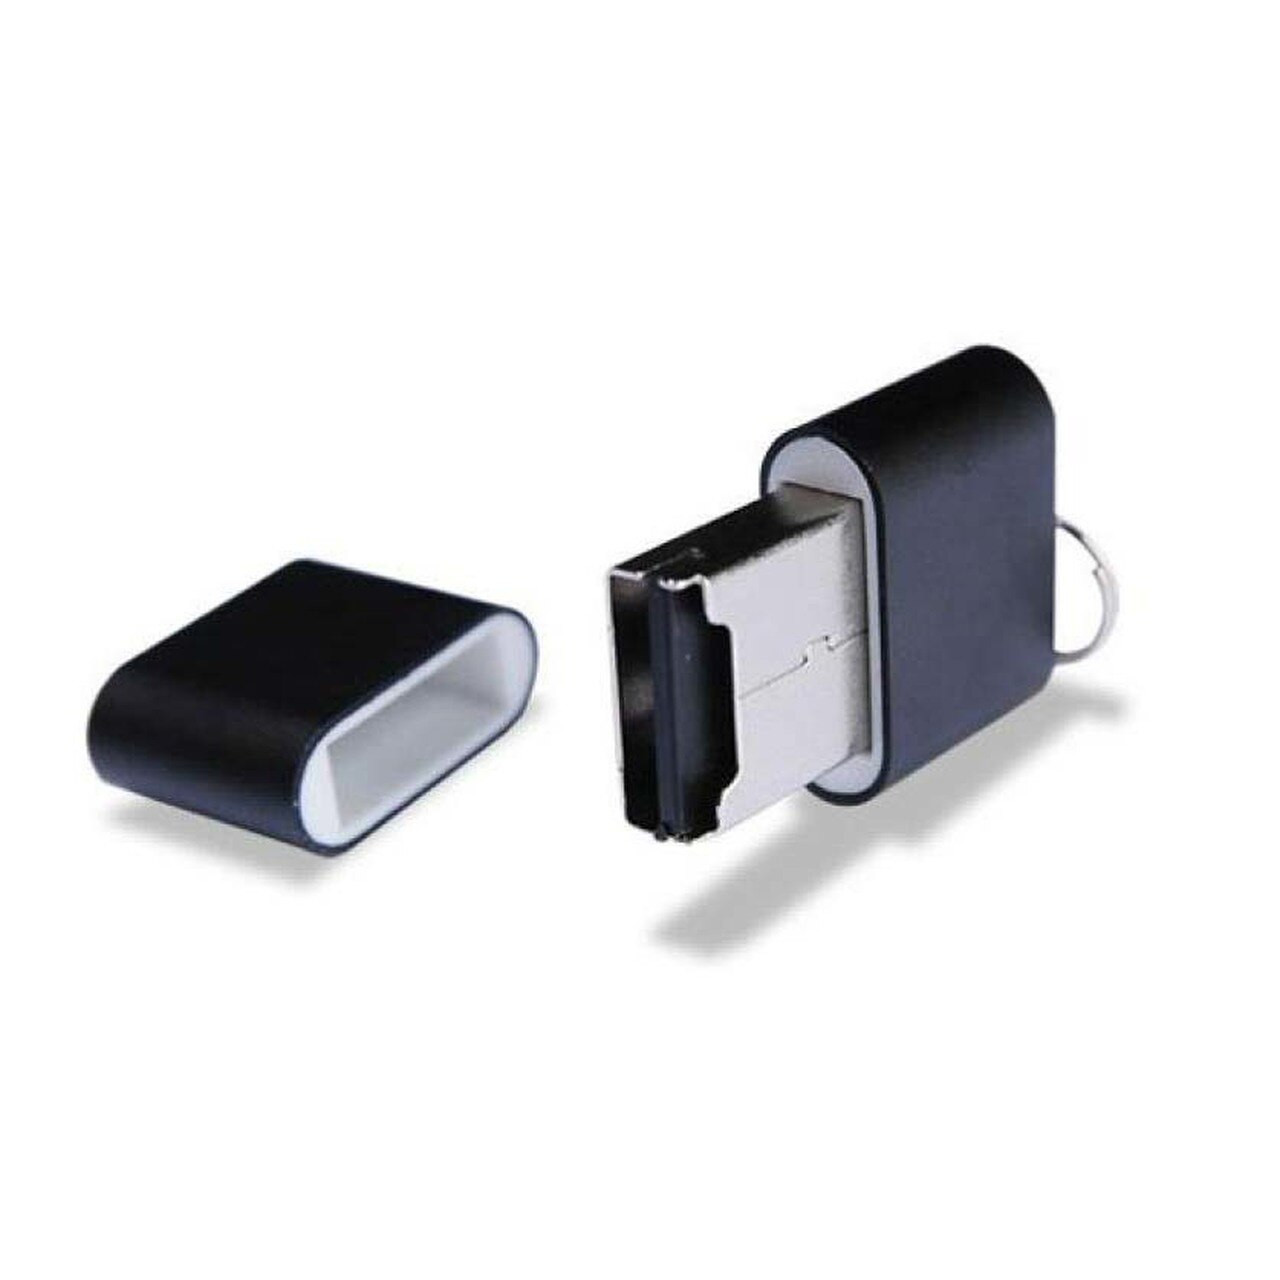 USB 2.0 Keychain SD - PiShop.us